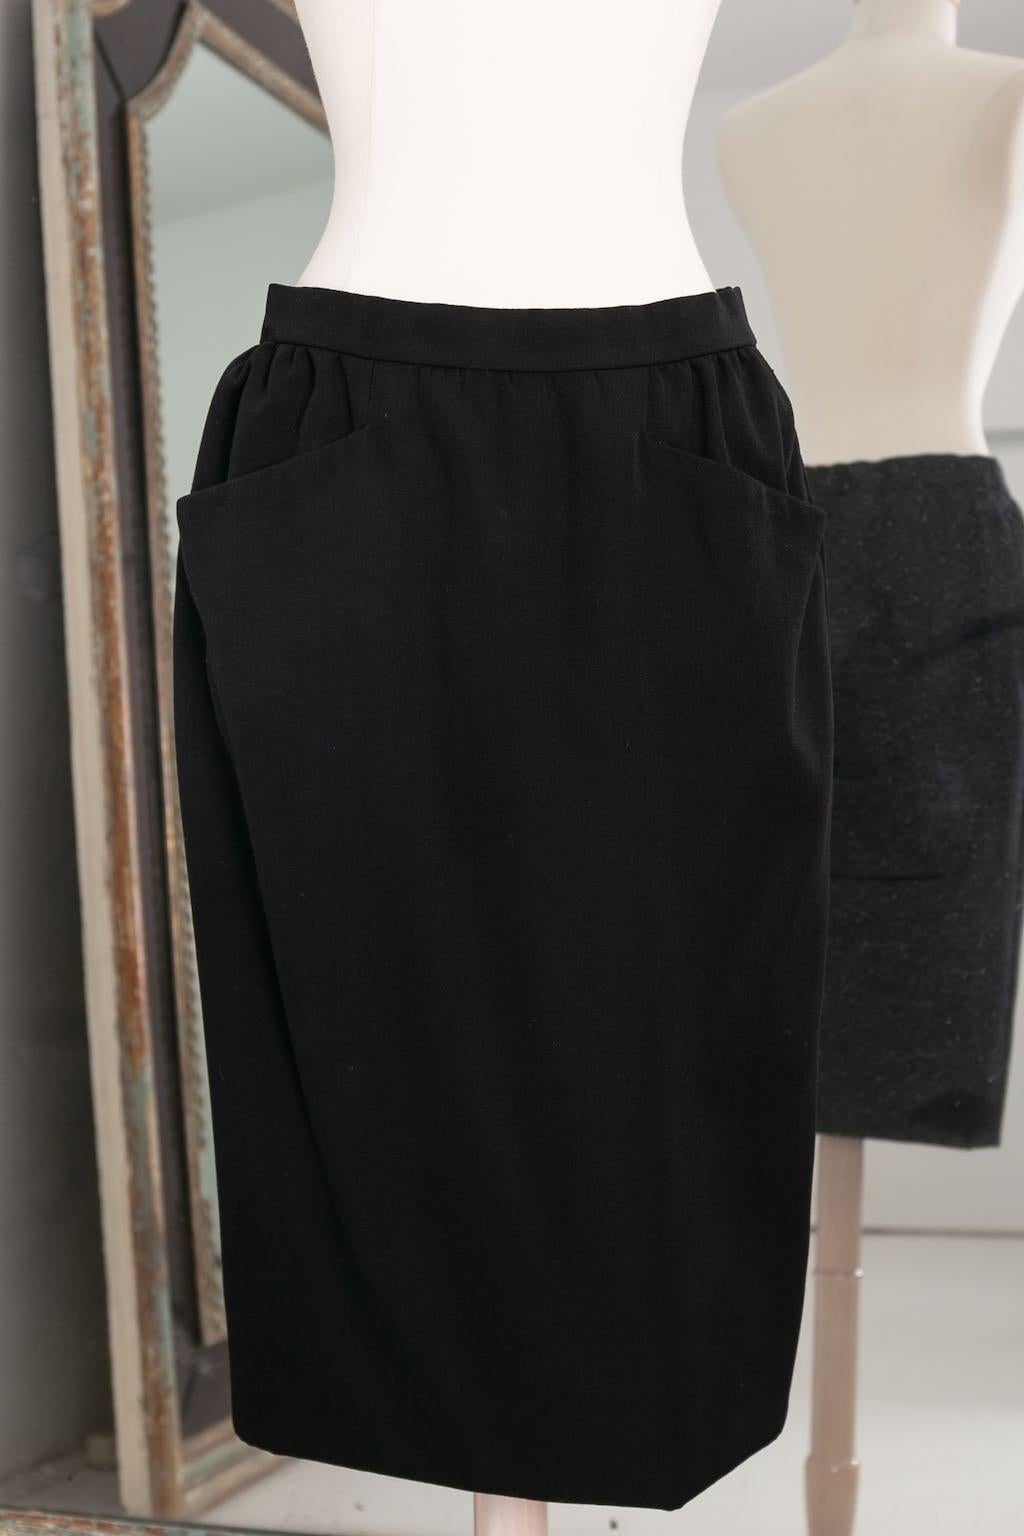 Yves Saint Laurent Haute Couture Black Skirt and Jacket Set, circa 1981/1982 3